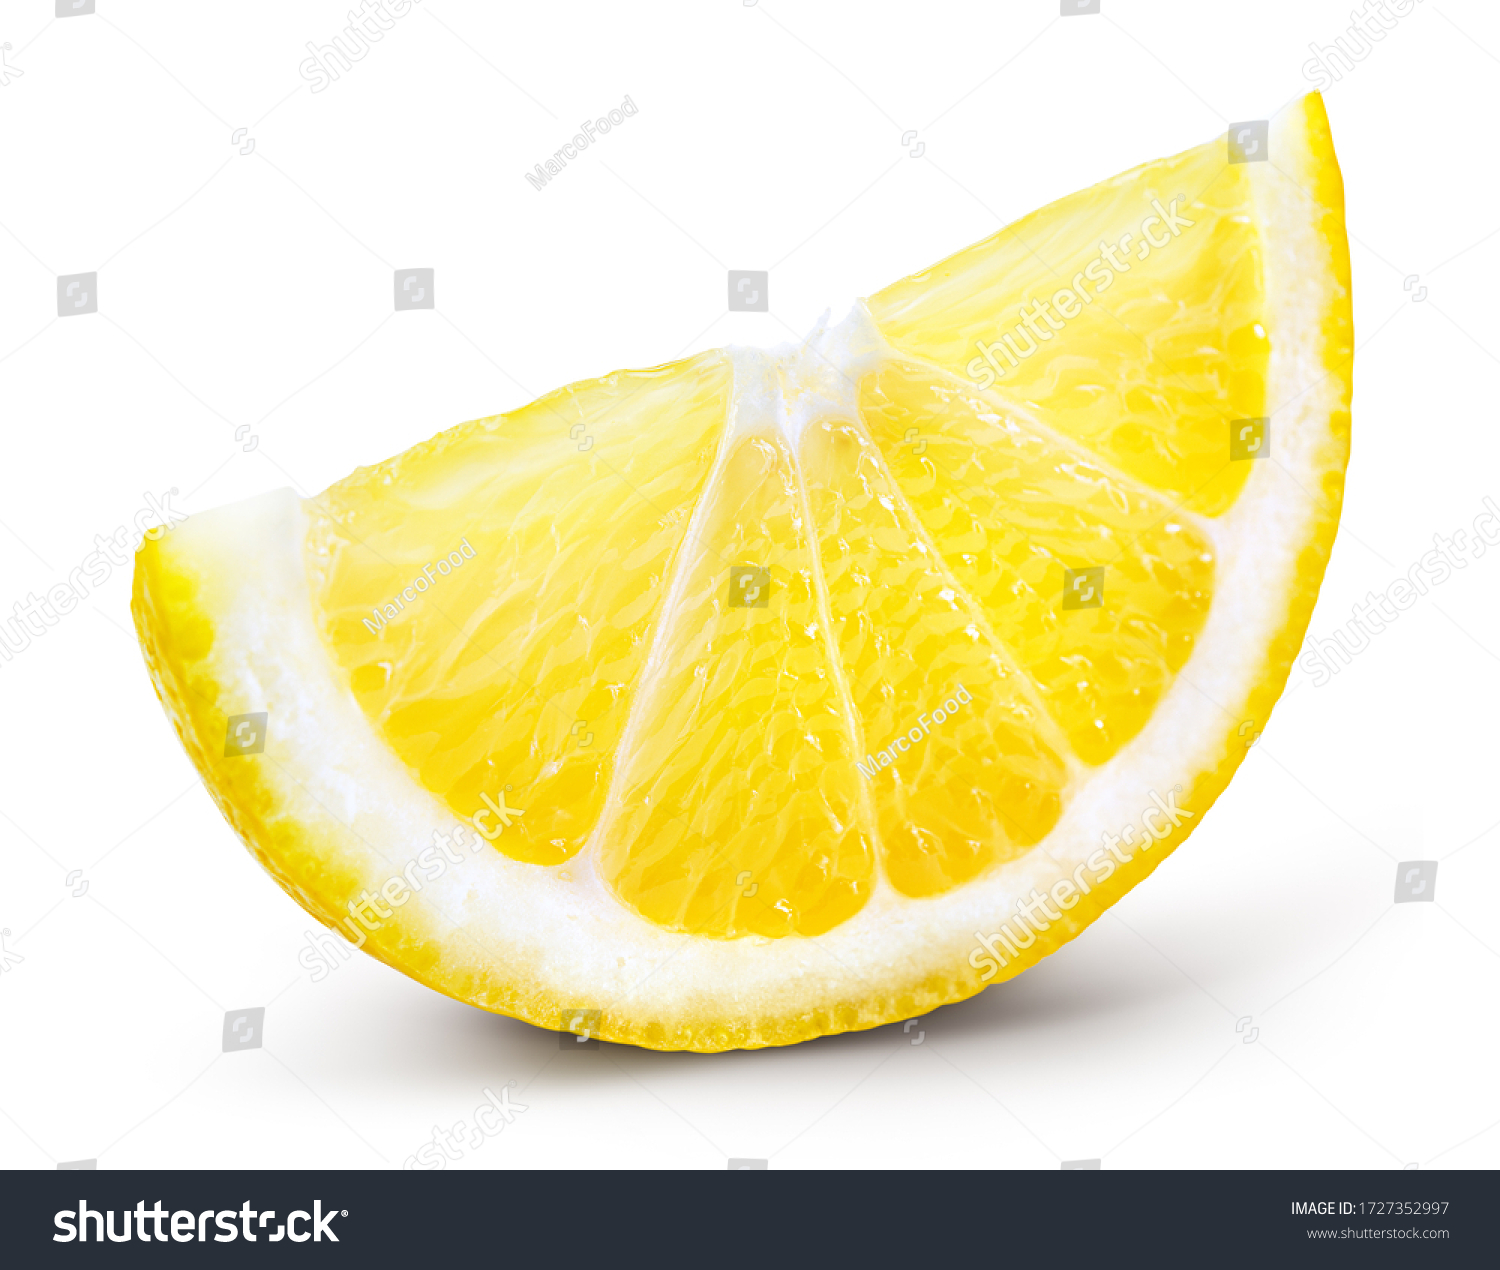 Lemon slice isolate. Cut lemon slice side view. Lemon slice with zest isolated. With clipping path. Perfect not AI lemon, true photo. #1727352997